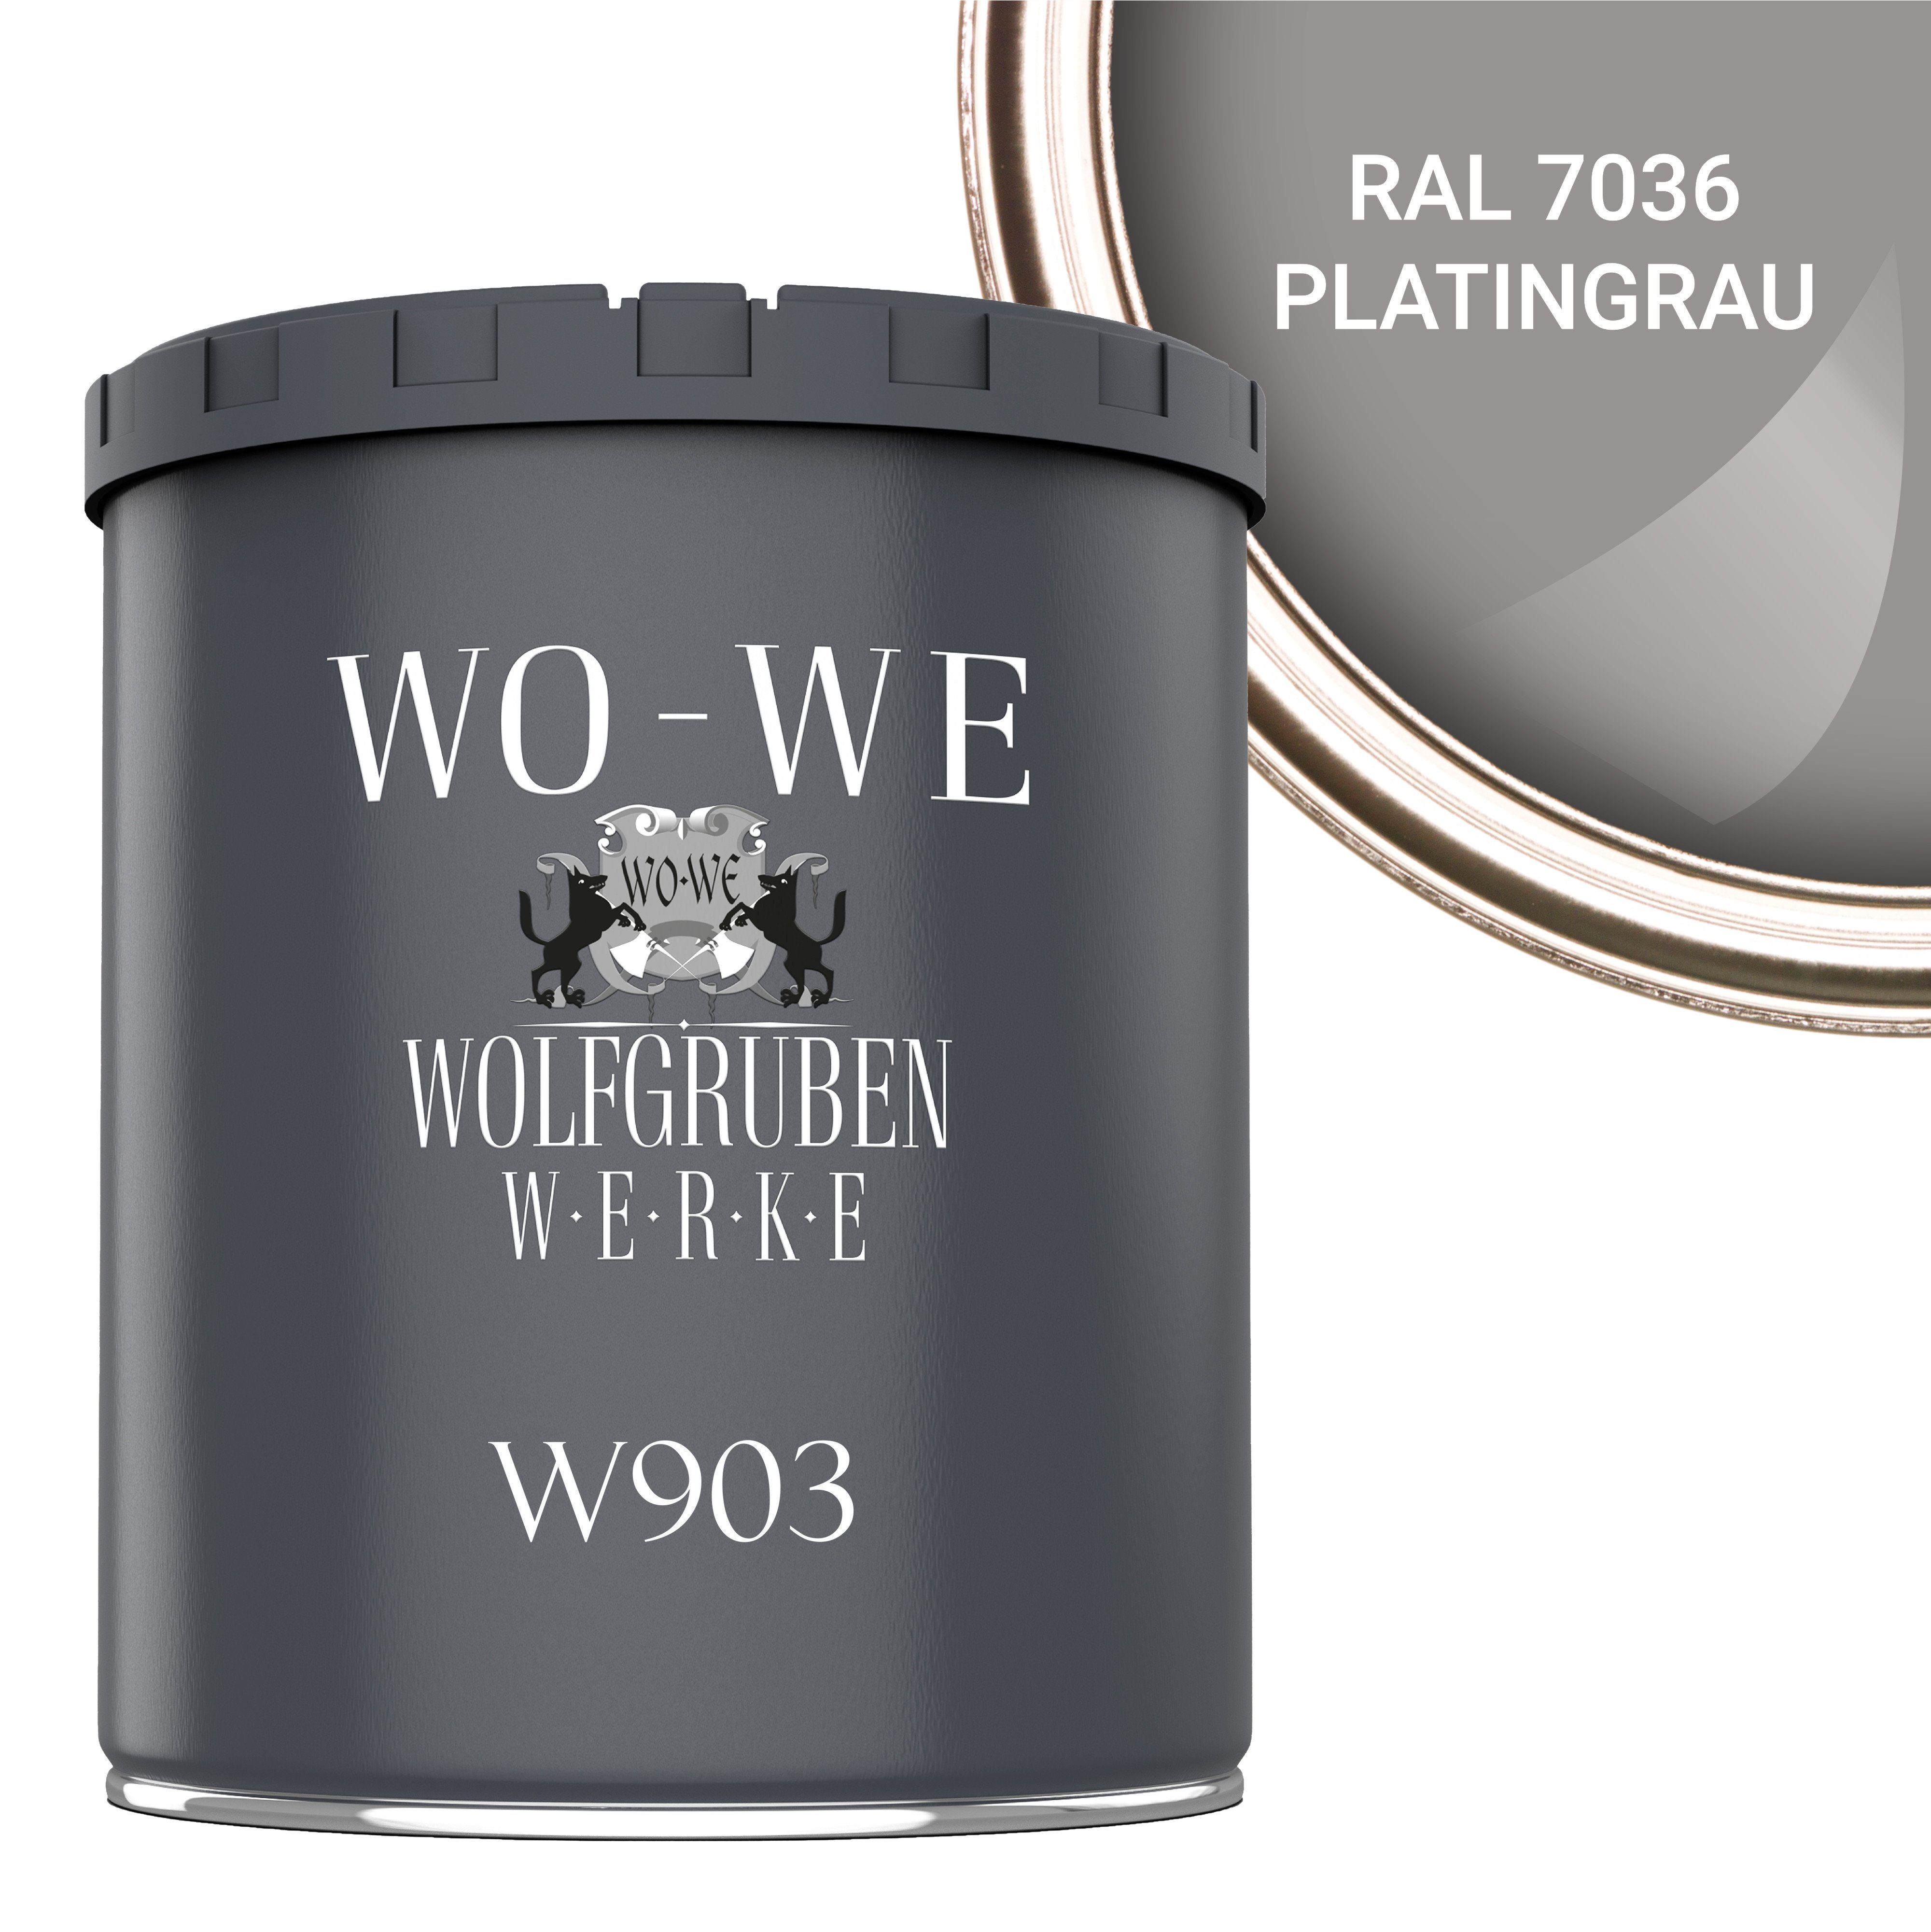 WO-WE Heizkörperfarbe Wasserbasis W903, 1-10L, Heizkörperlack Platingrau 7036 RAL Heizungsfarbe